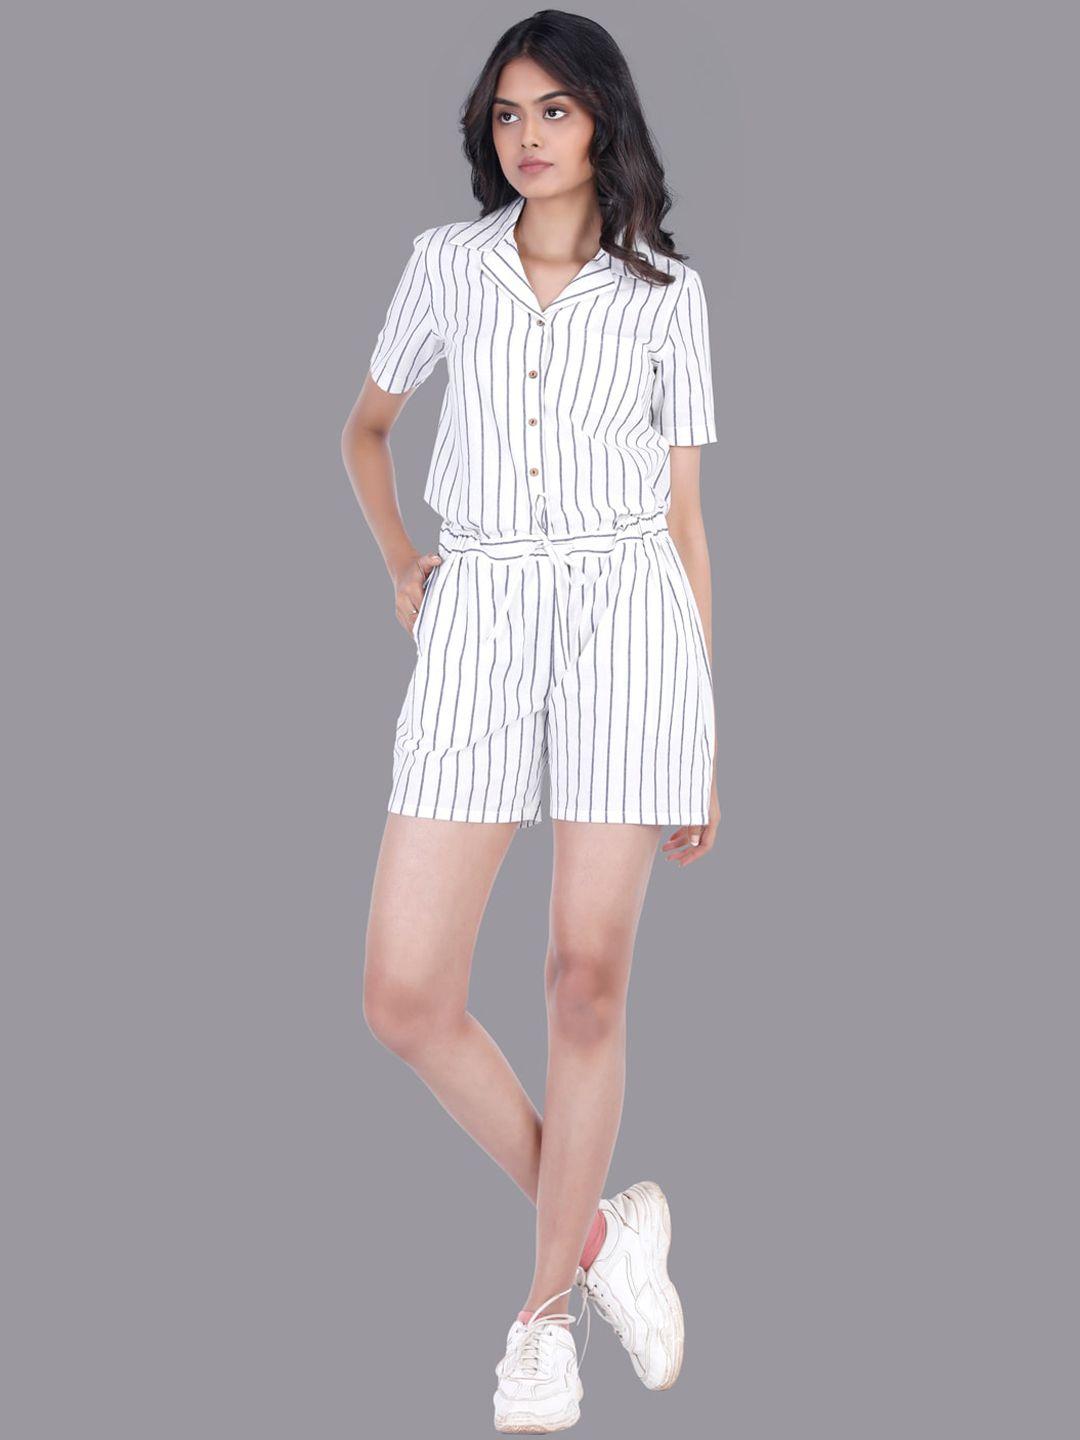 rentiyo women white striped shorts